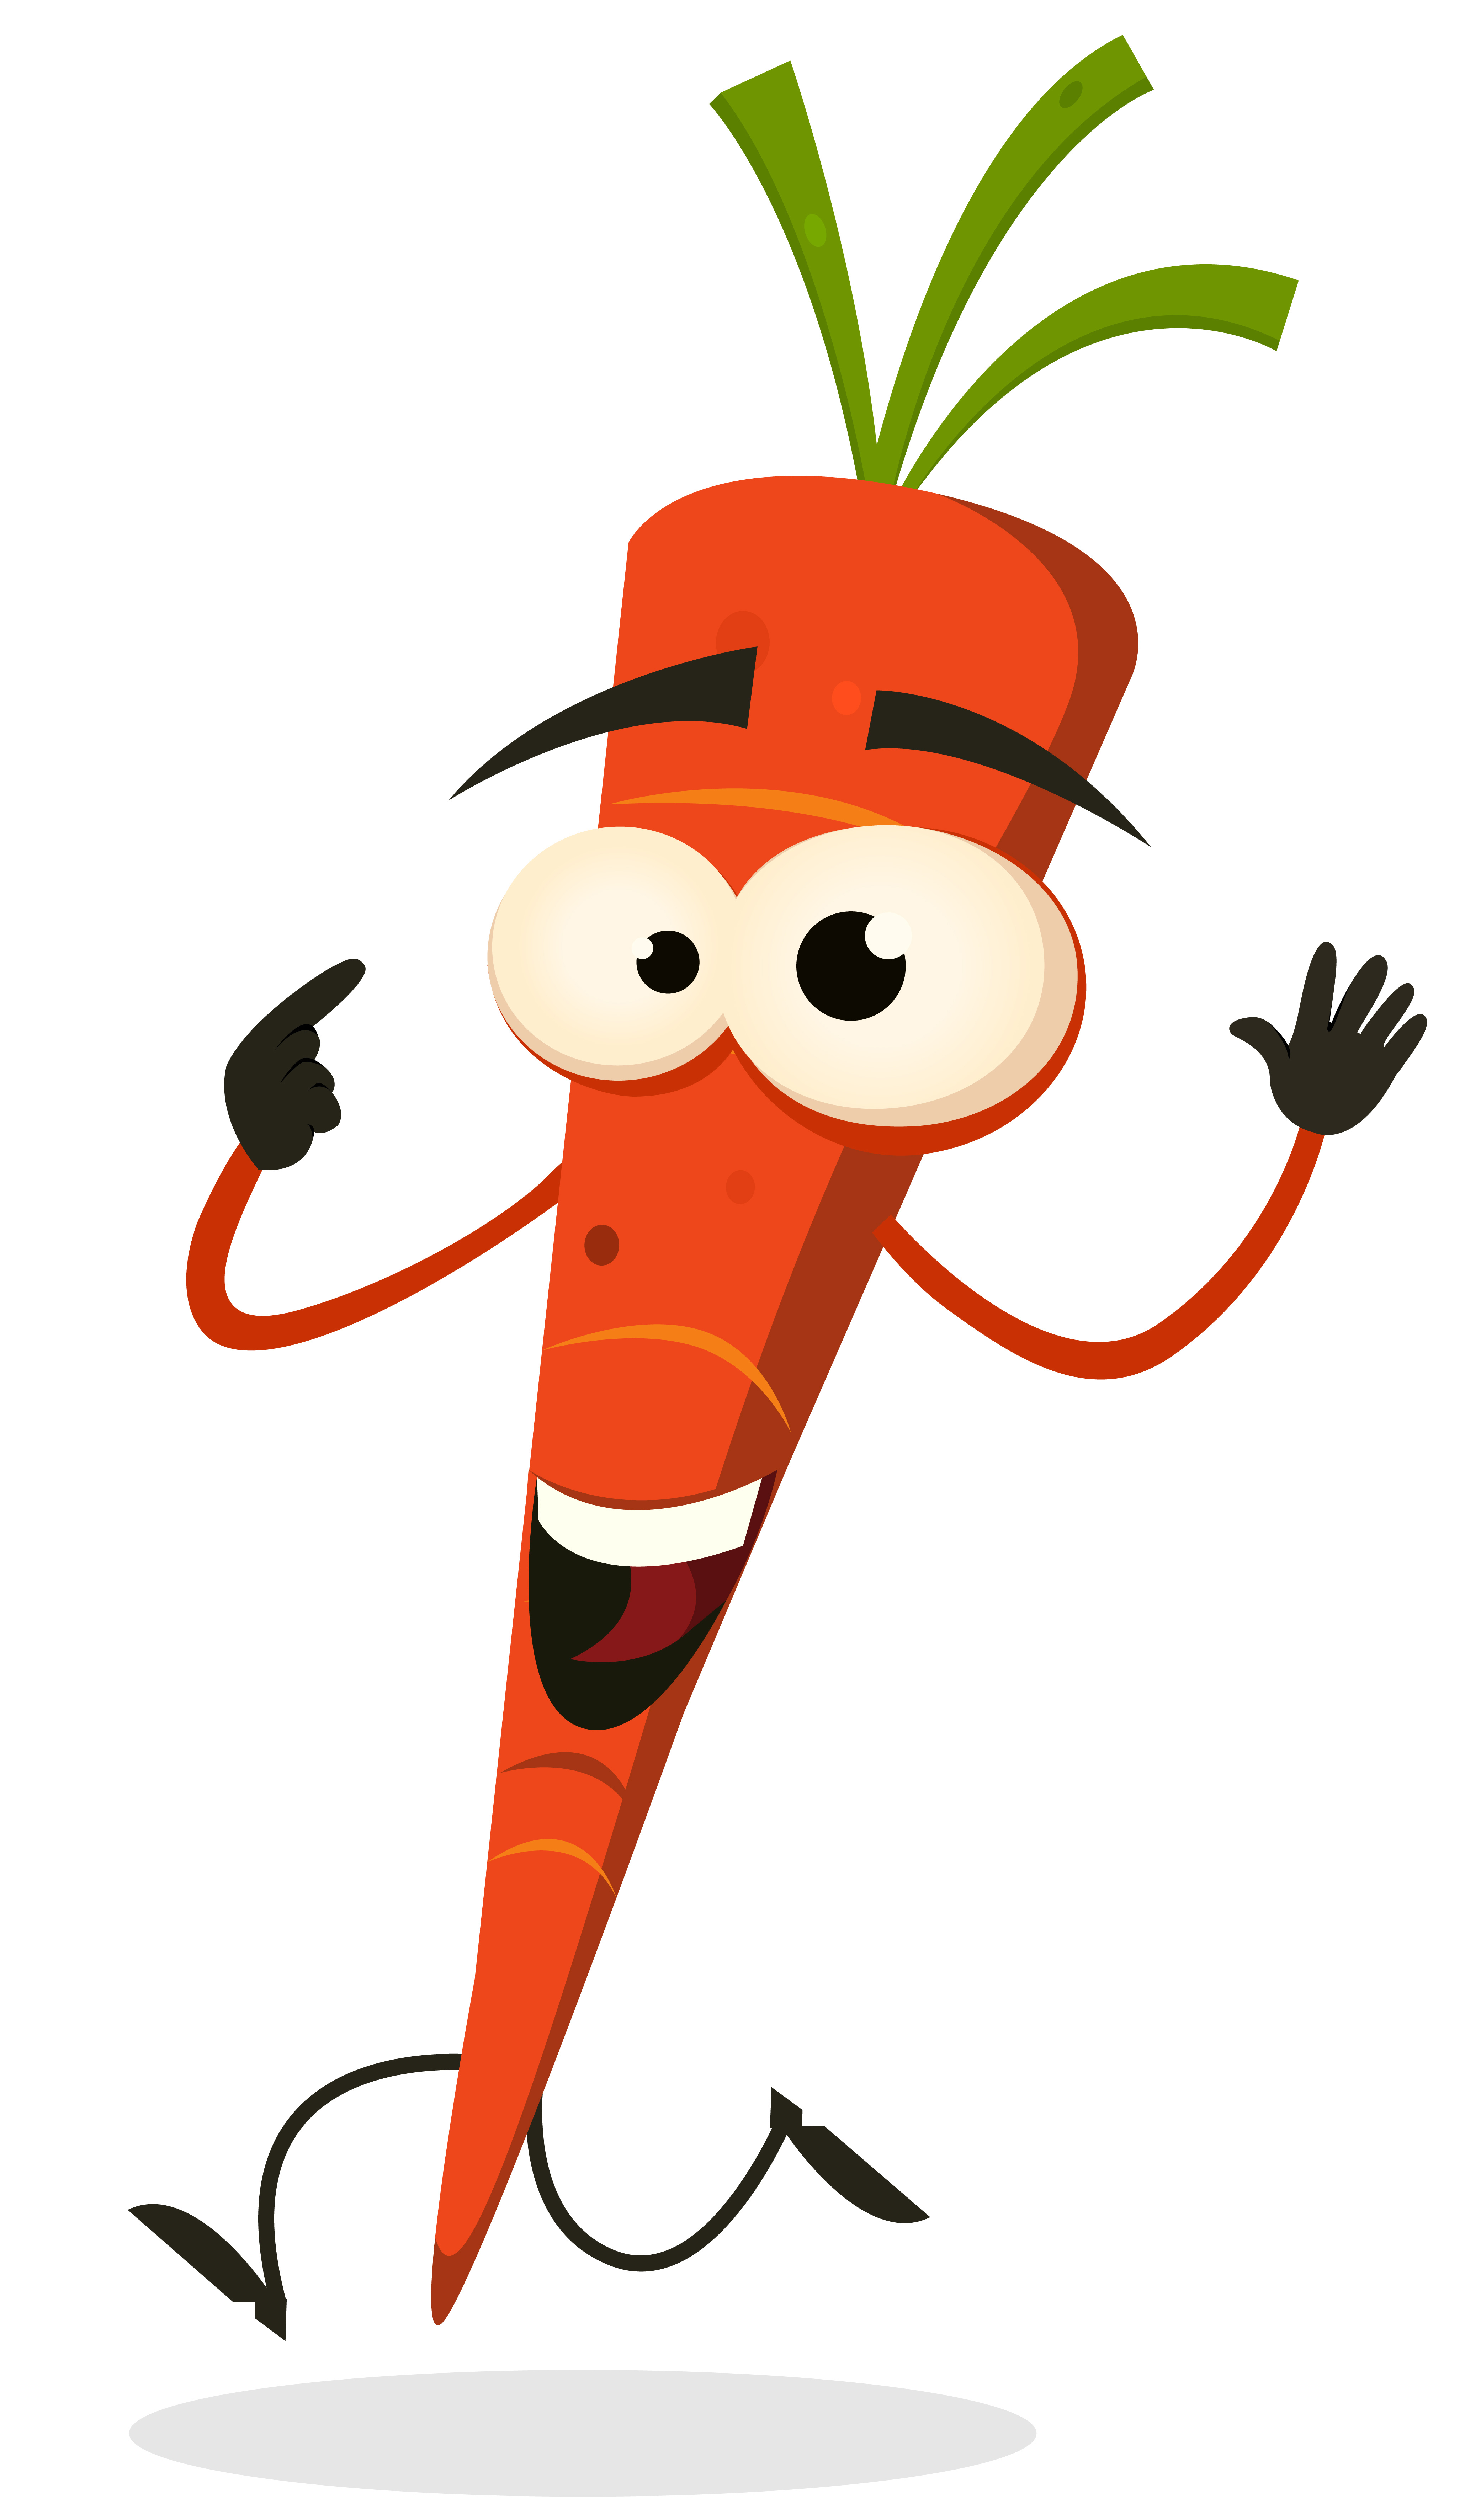 Download Cartoon Happy Carrot Character Running - Download Free Vectors, Clipart Graphics & Vector Art